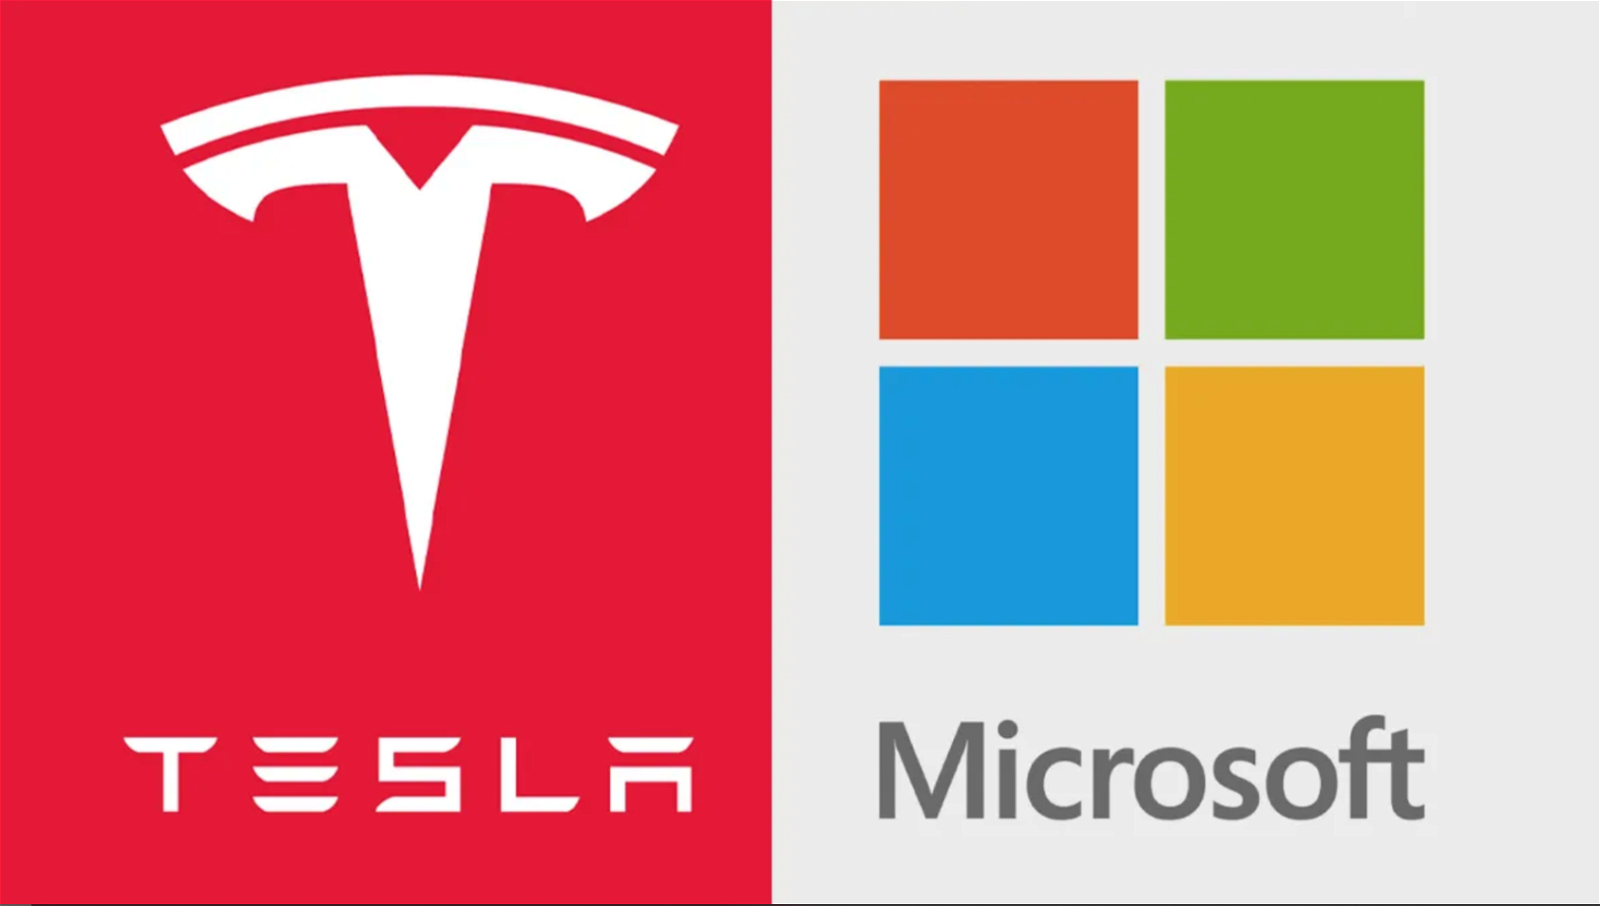 Tesla’s Autonomous Dreams vs. Microsoft’s Productivity Boost